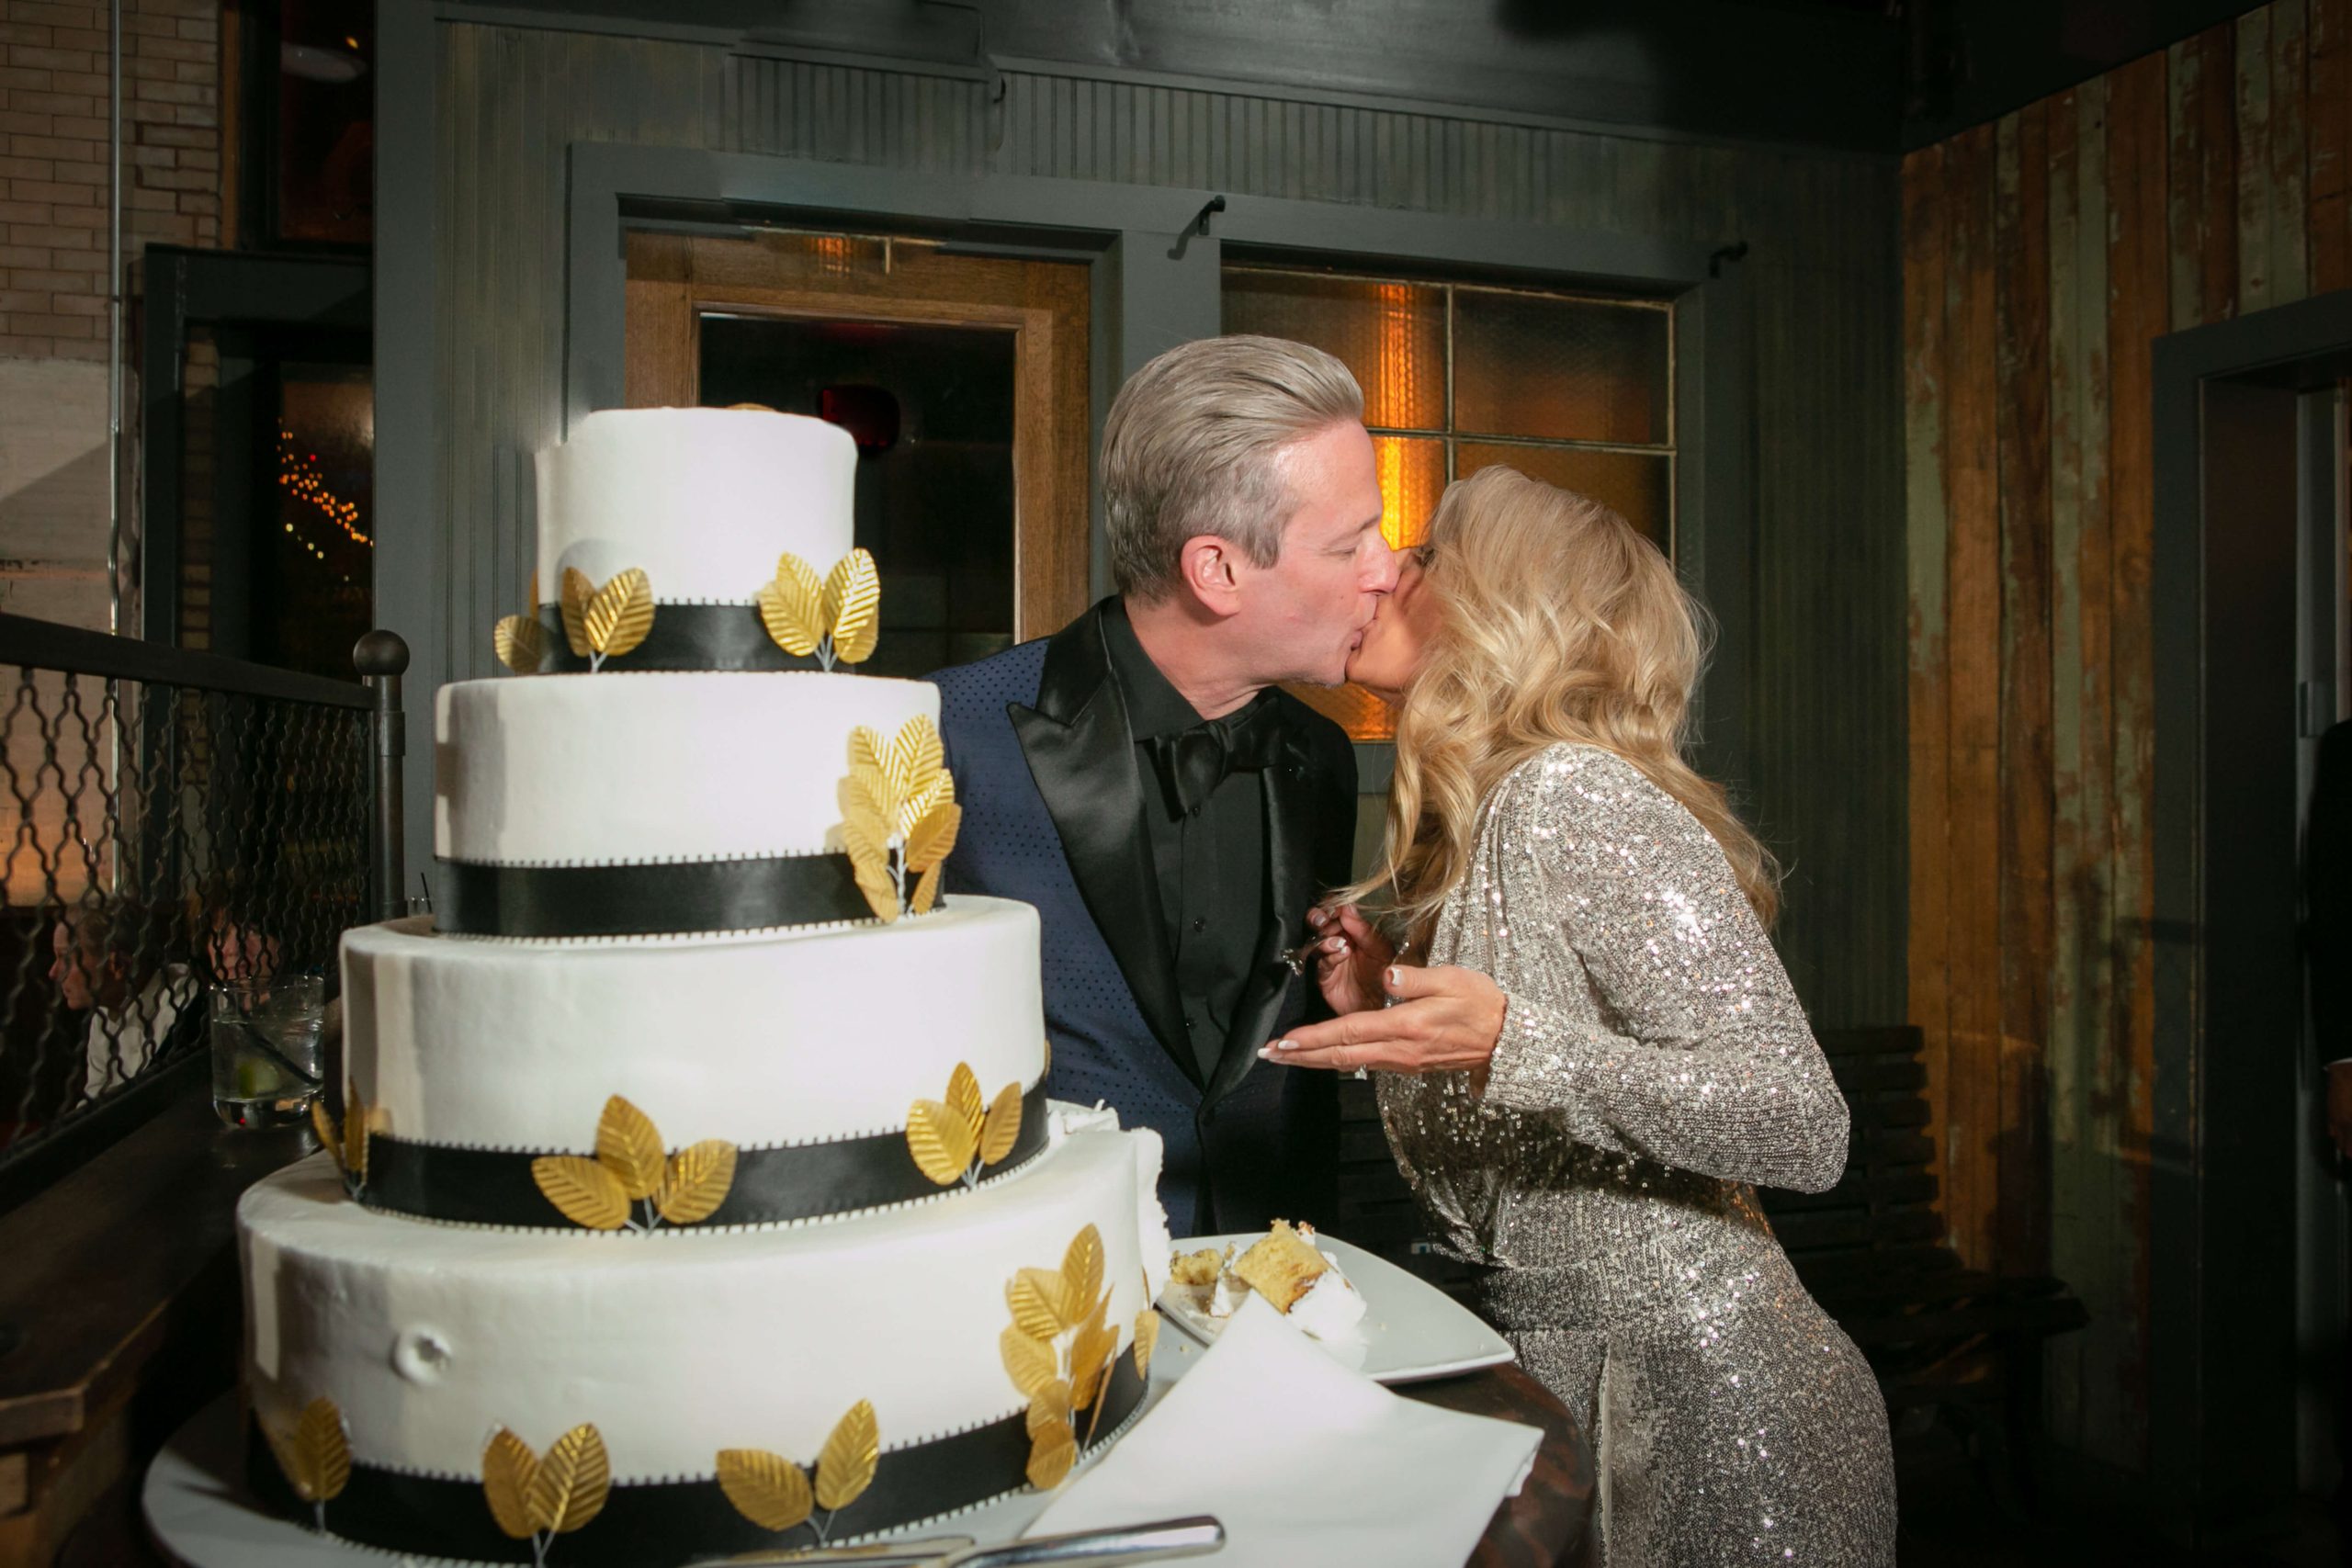 bride and groom kiss at wedding cake